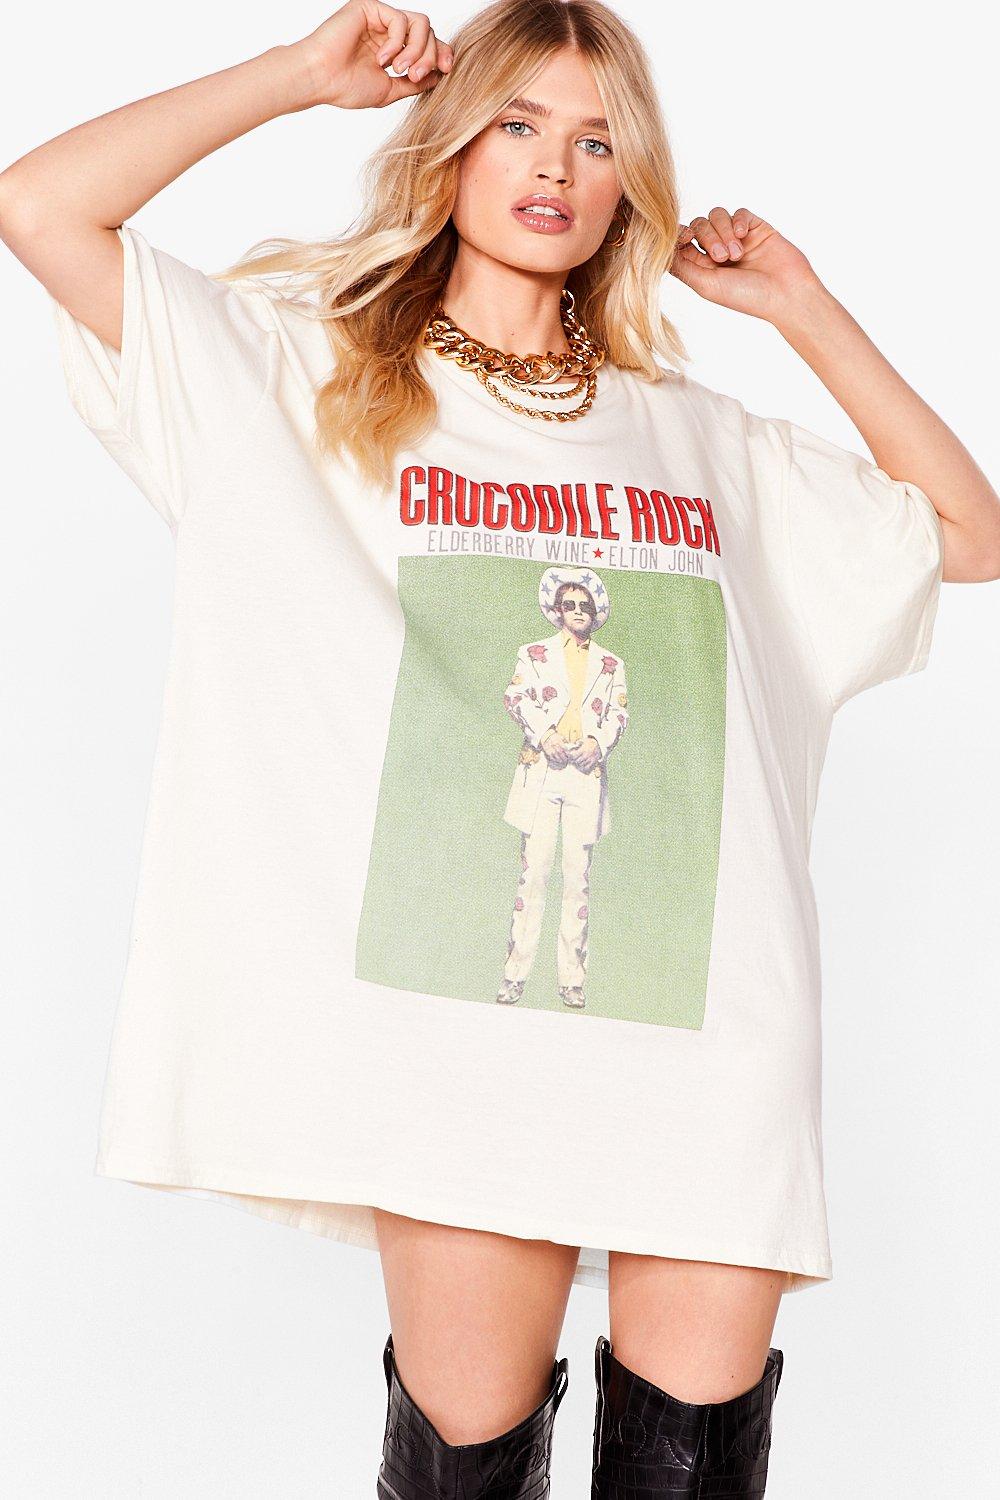 Crocodile Rock Graphic Band T-Shirt ...